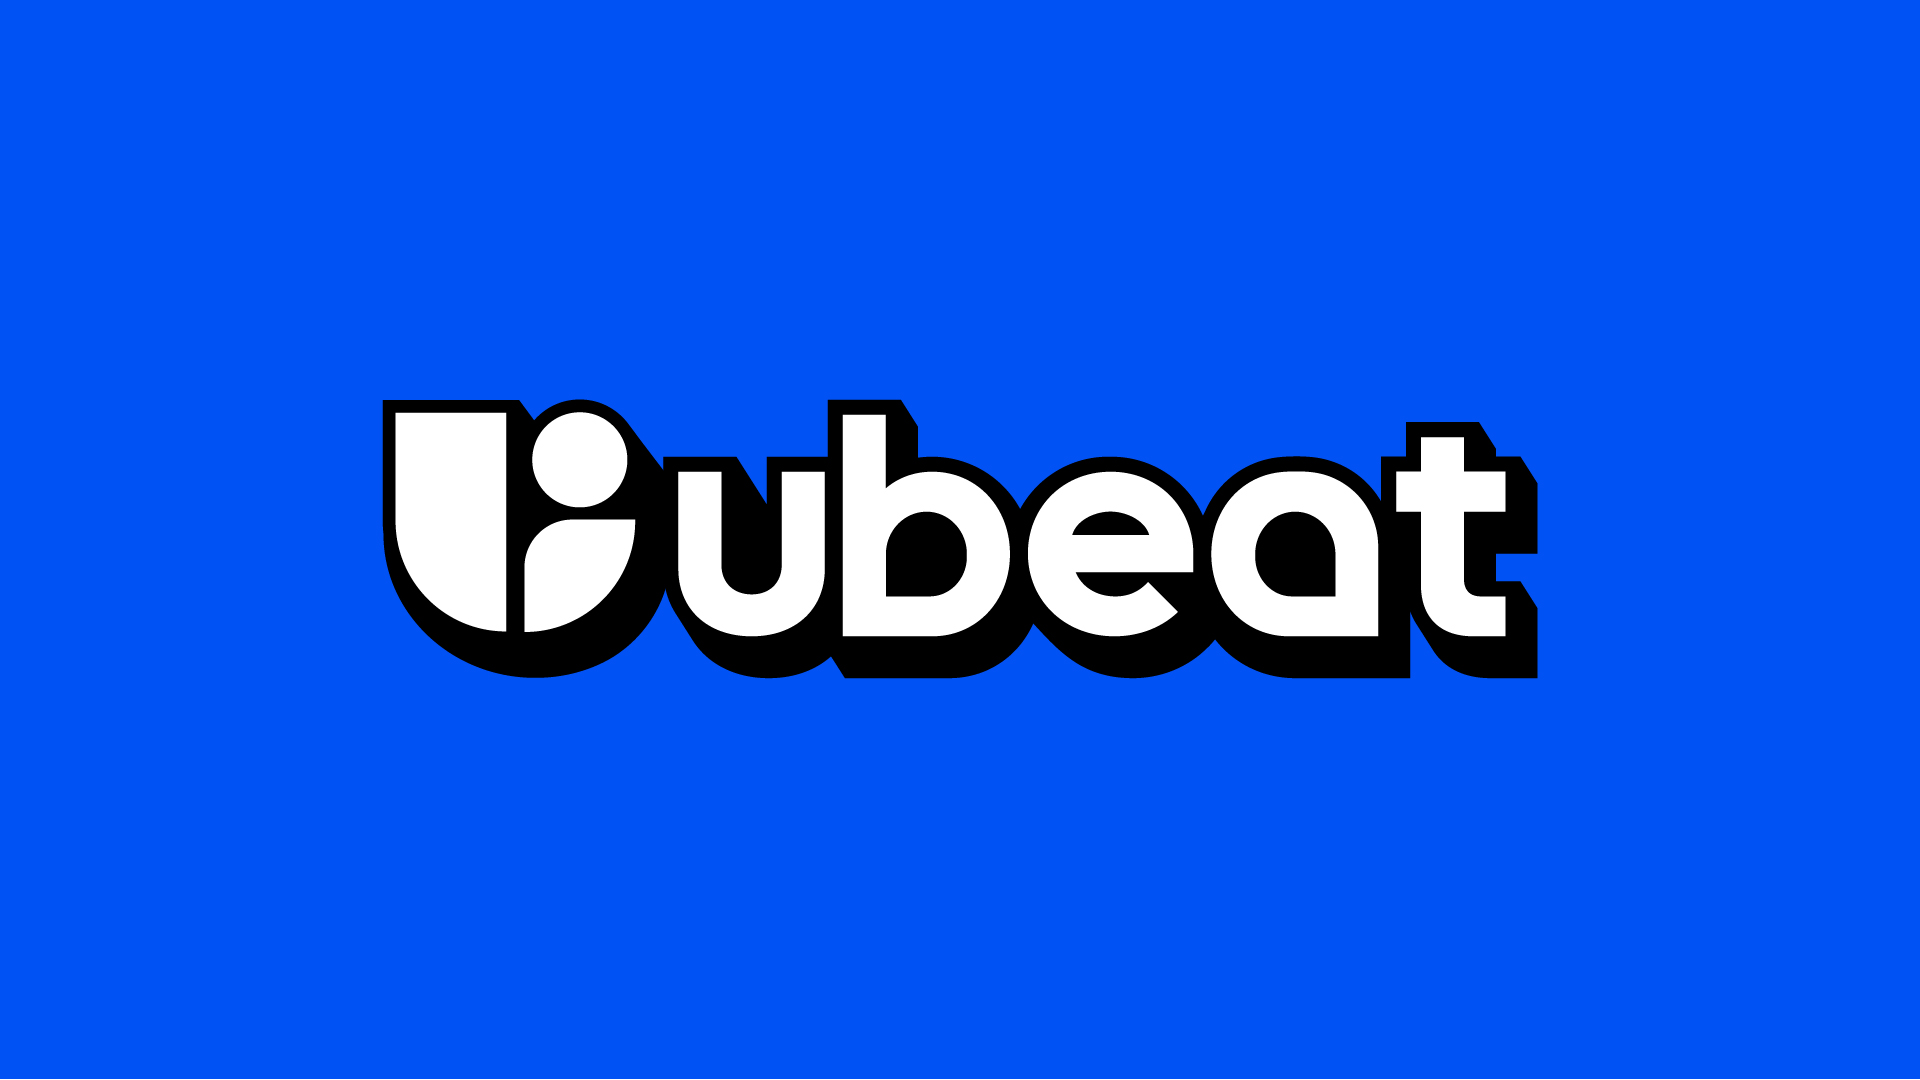 (c) Ubeat.tv